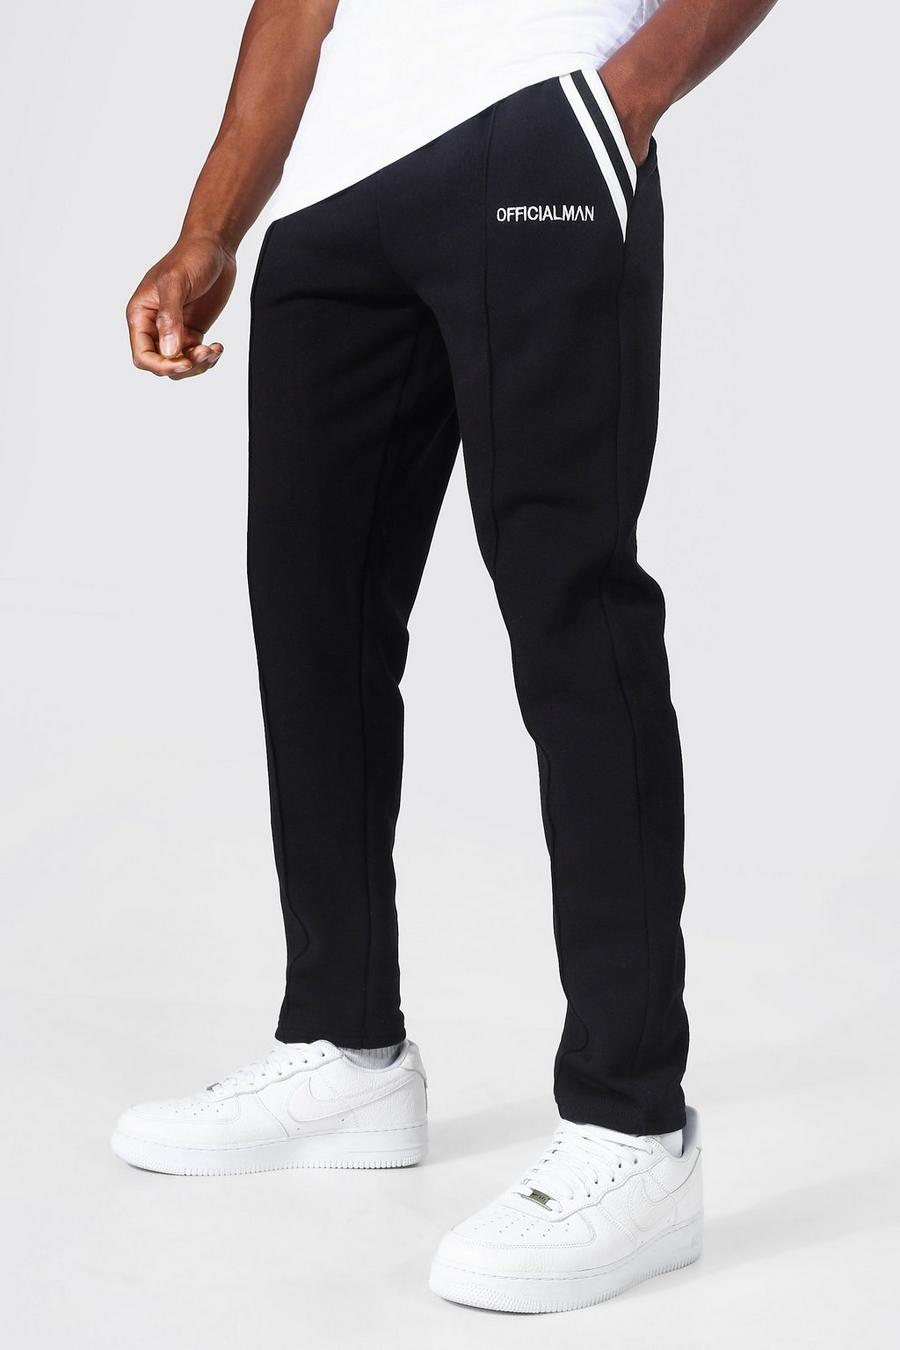 Pantaloni tuta Slim Fit con tasche e nervature, Black negro image number 1